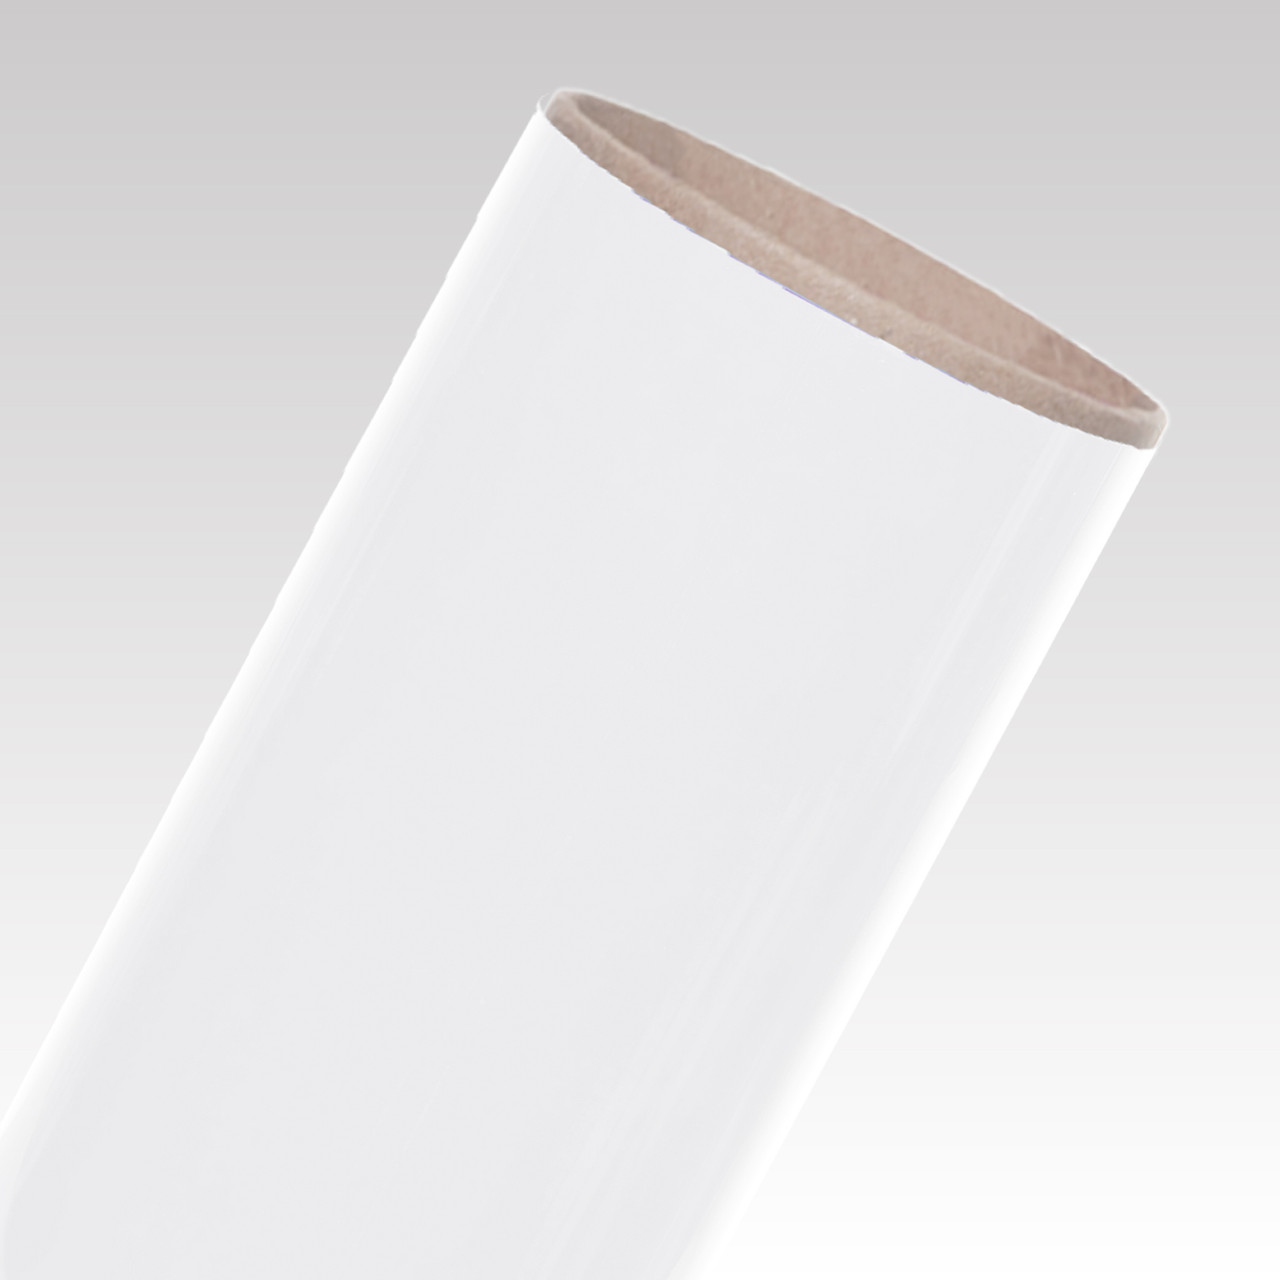 Paper Transfer Tape (Medium tack) 12 x 100 Ft Roll